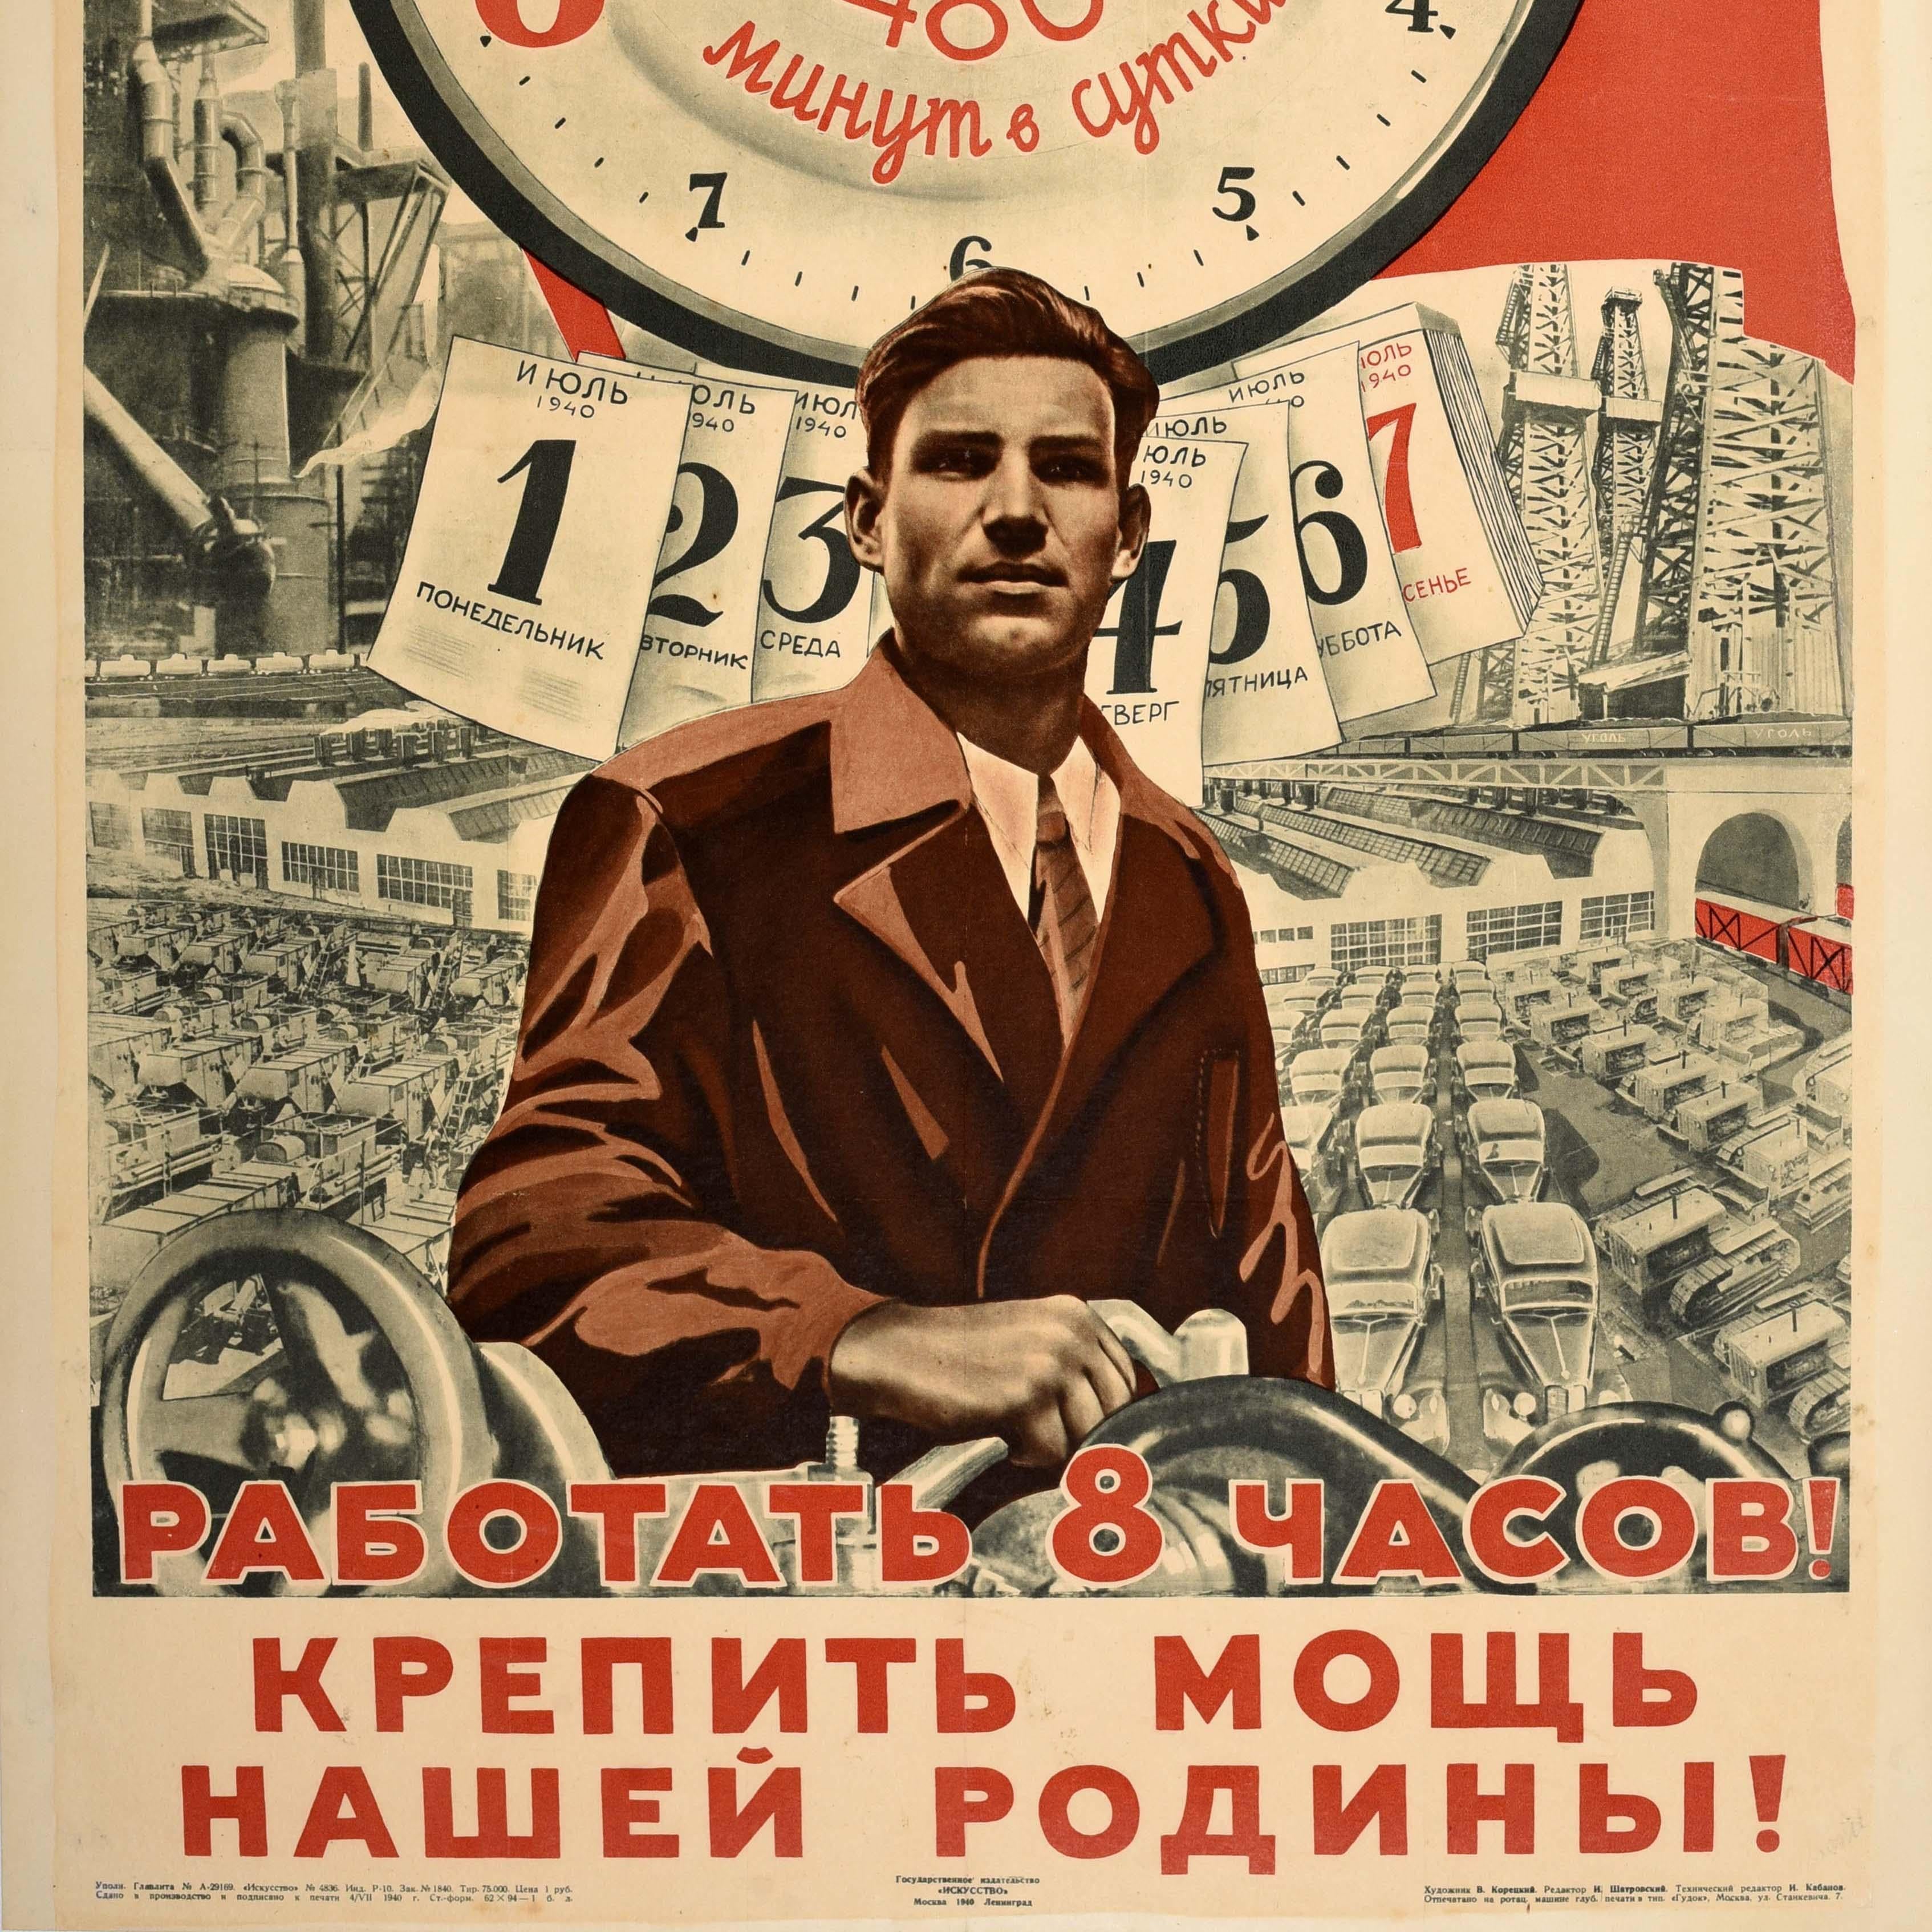 Russian Original Vintage WWII Propaganda Poster Work 8 Hours Strengthen Motherland USSR For Sale